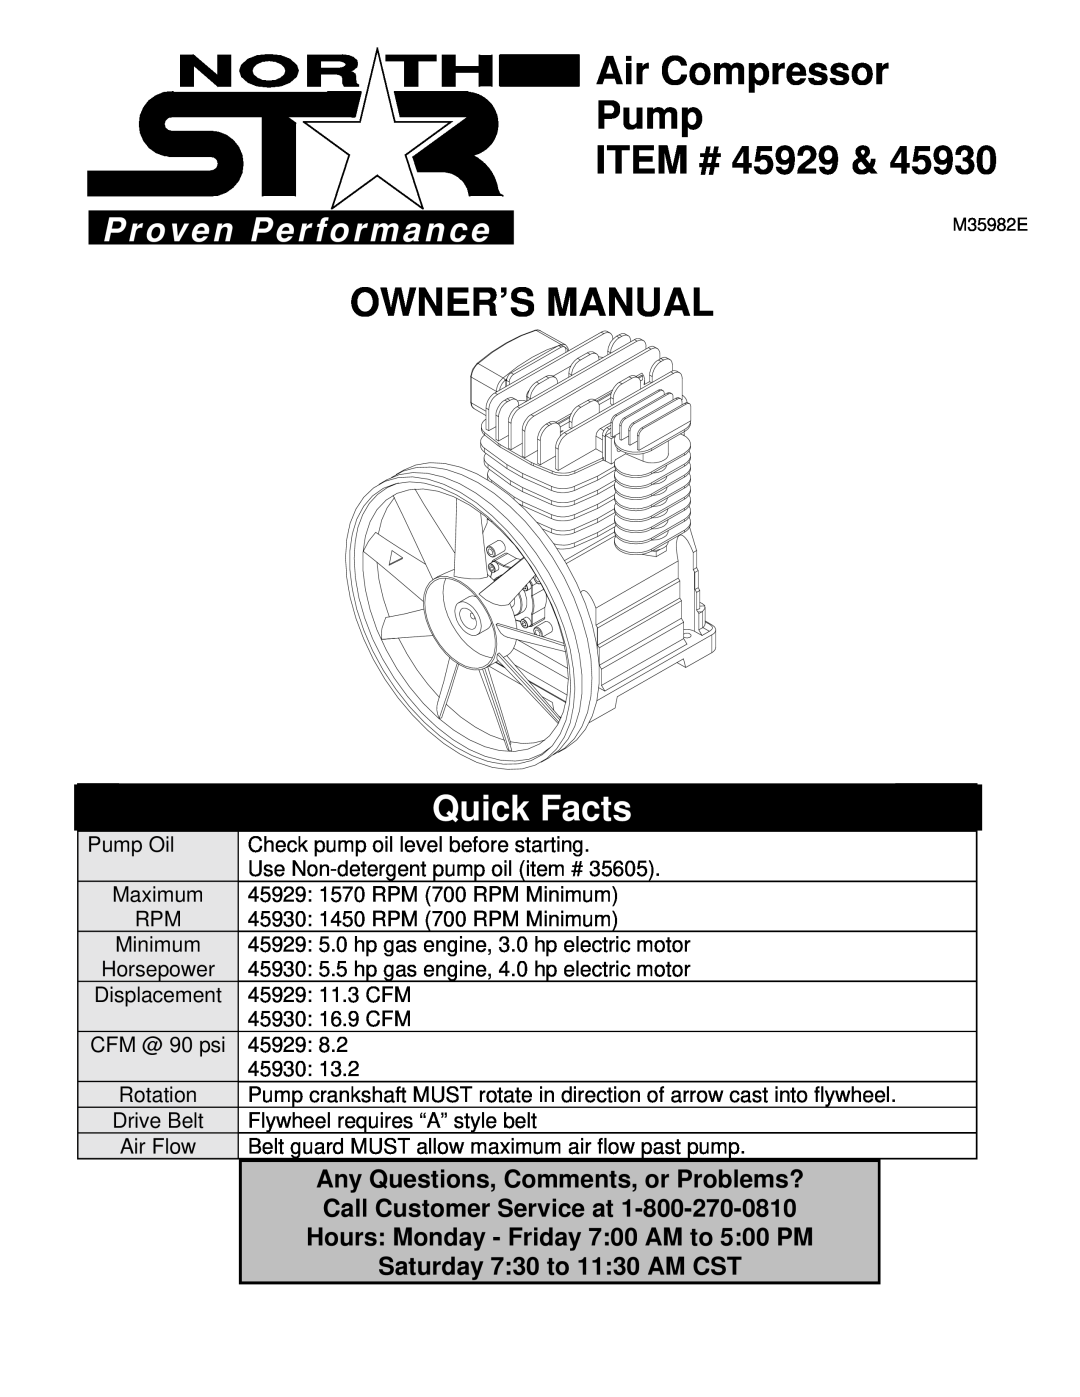 Northern Industrial Tools 45930, M35982E owner manual Air Compressor, Pump ITEM # 45929, Owner’S Manual, Quick Facts 